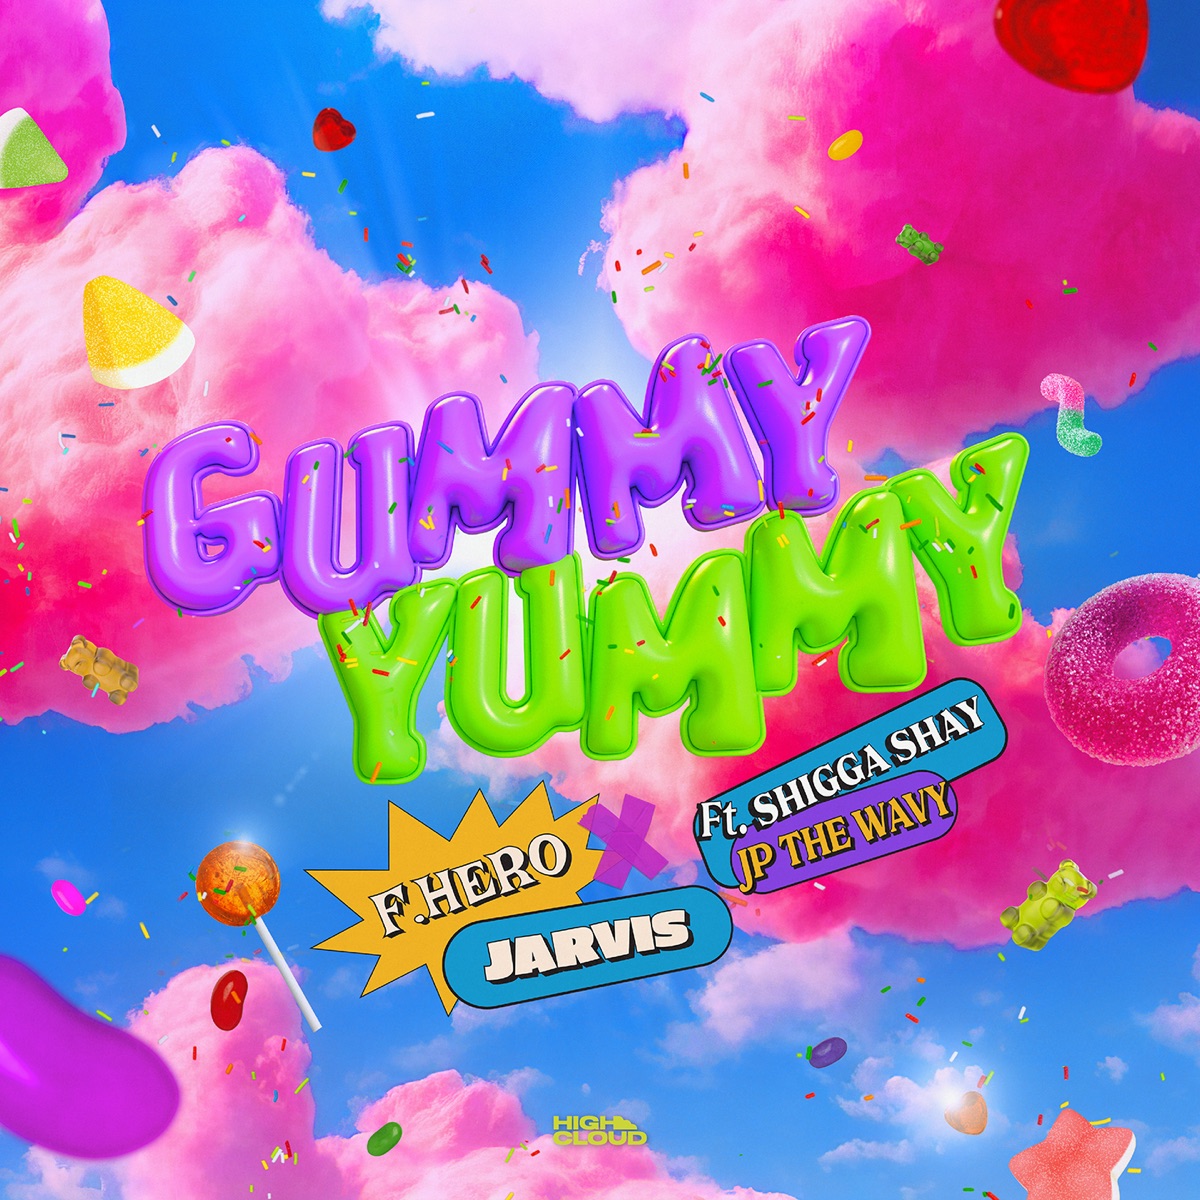 『F.HERO x JARVIS - GUMMY YUMMY (feat. ShiGGa Shay & JP THE WAVY)』収録の『GUMMY YUMMY (feat. ShiGGa Shay & JP THE WAVY)』ジャケット